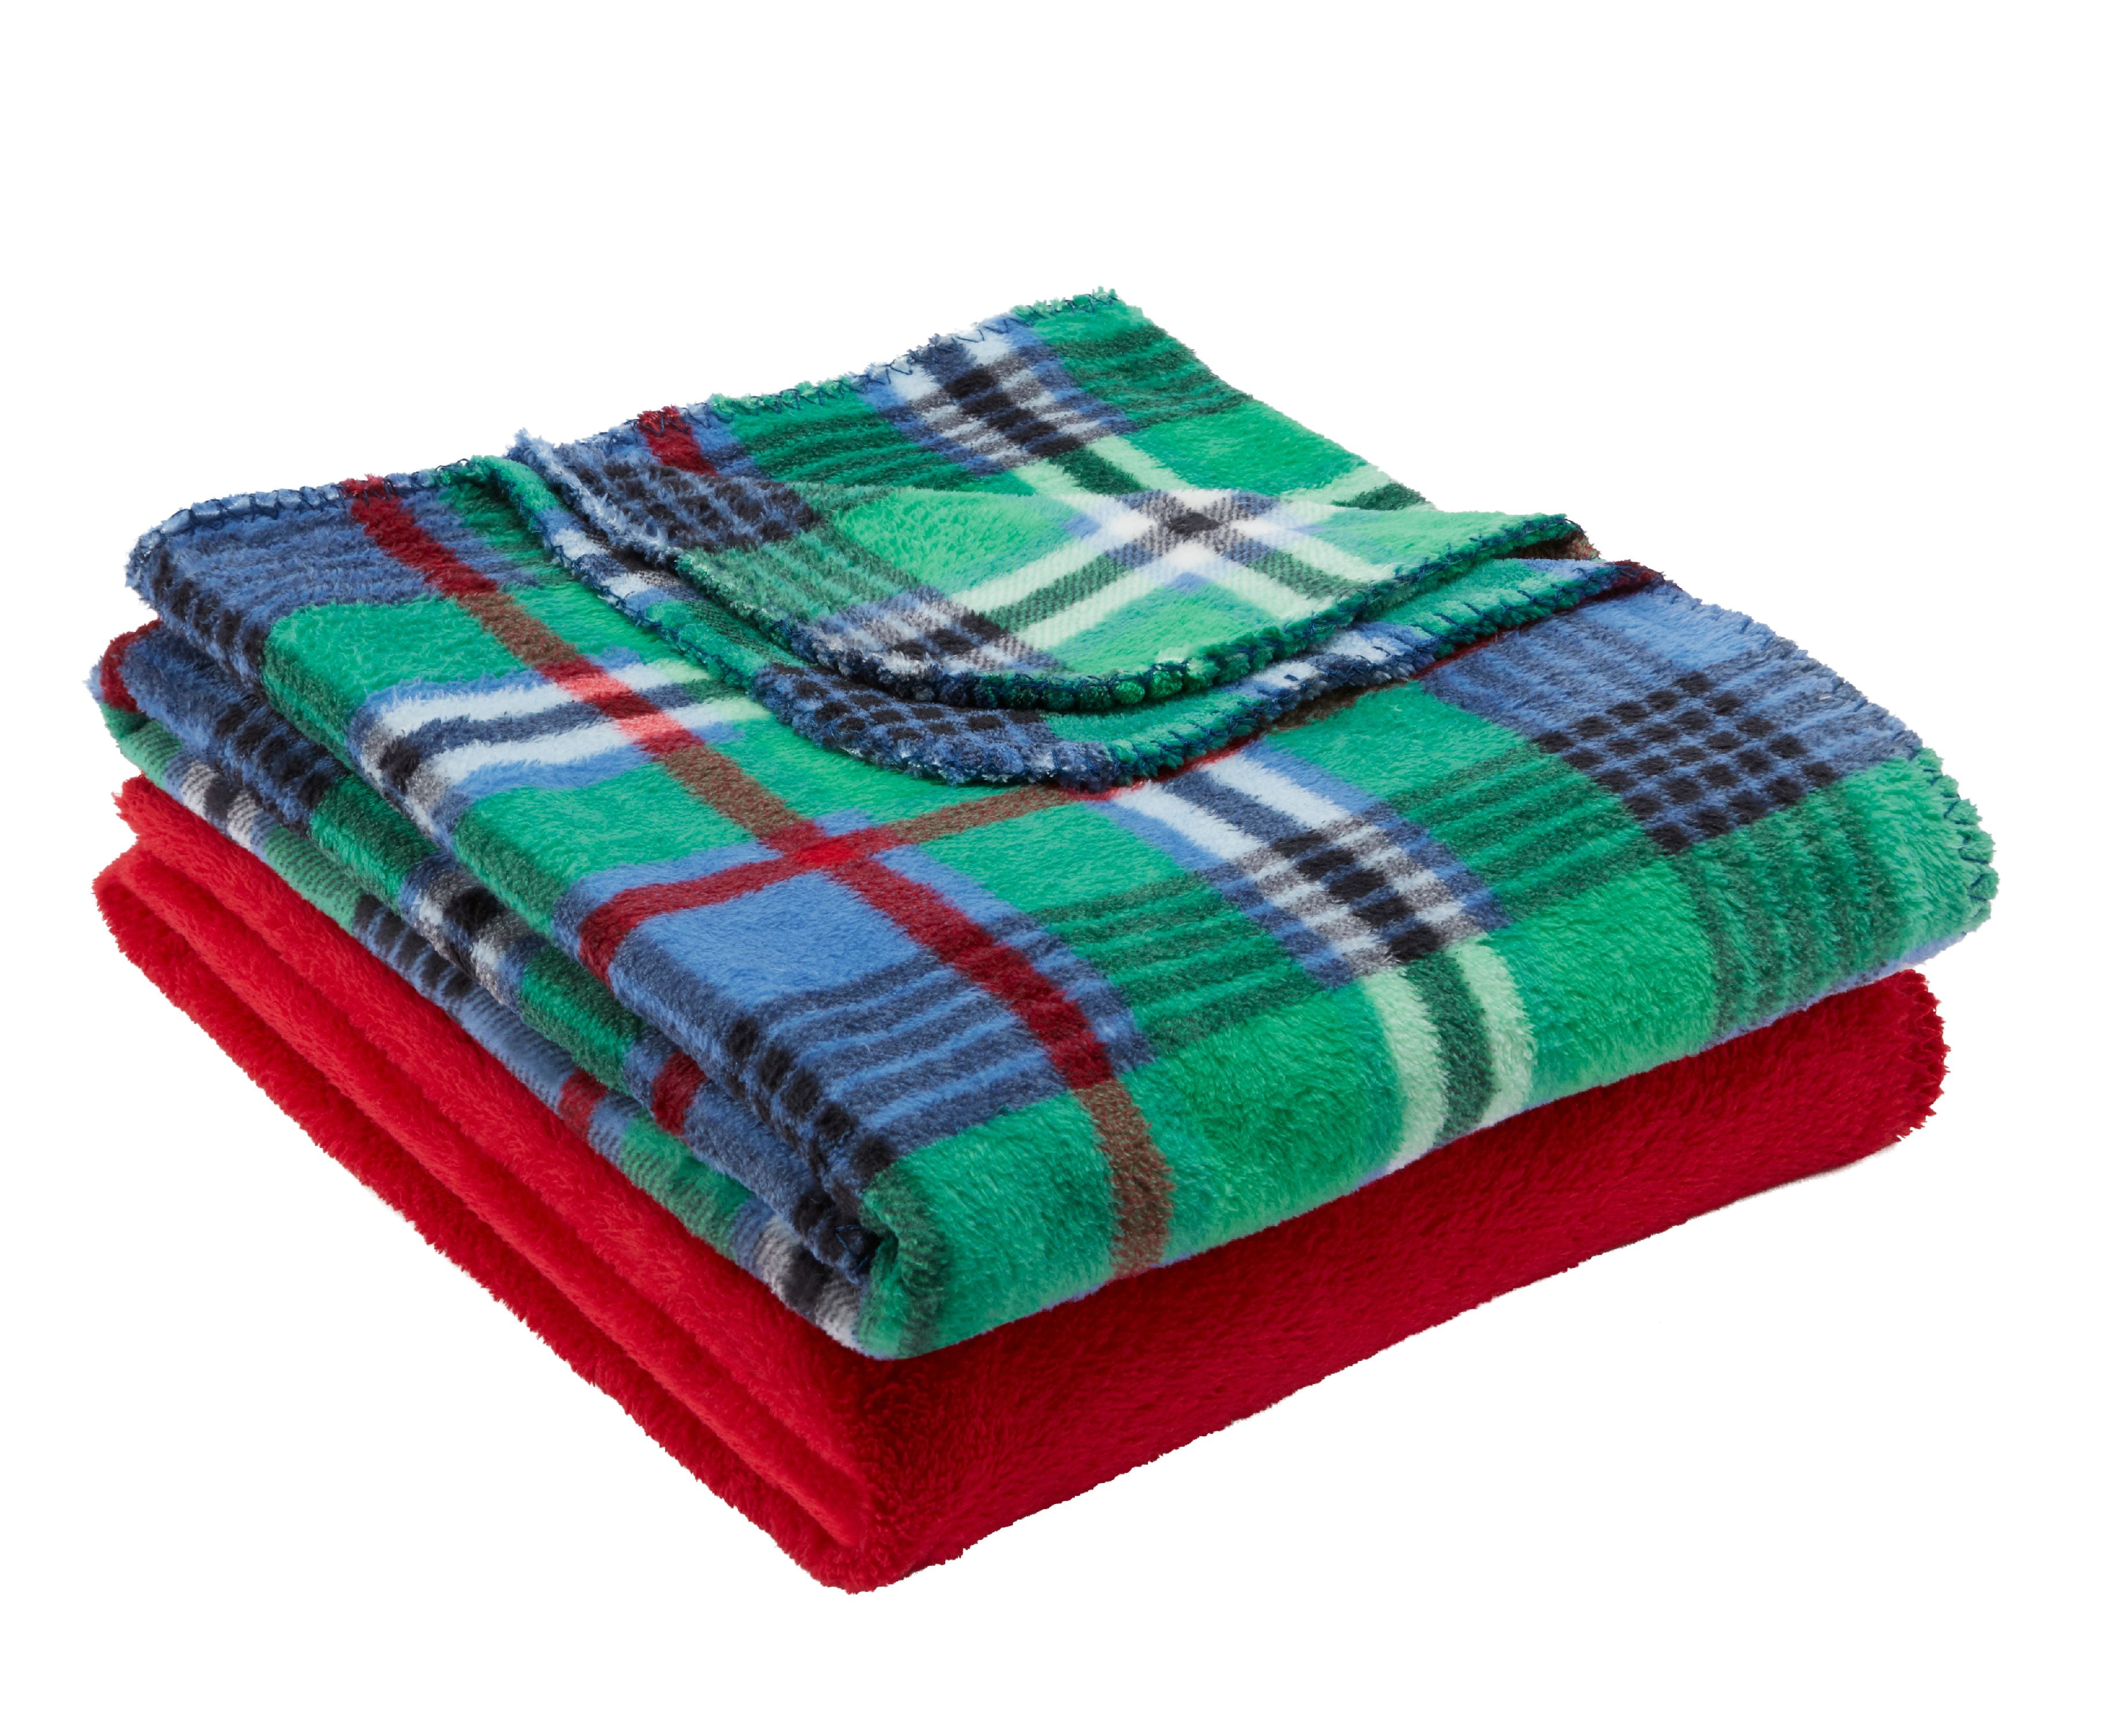 Plush Blanket Basics Soft and Cozy Green 50 x 60